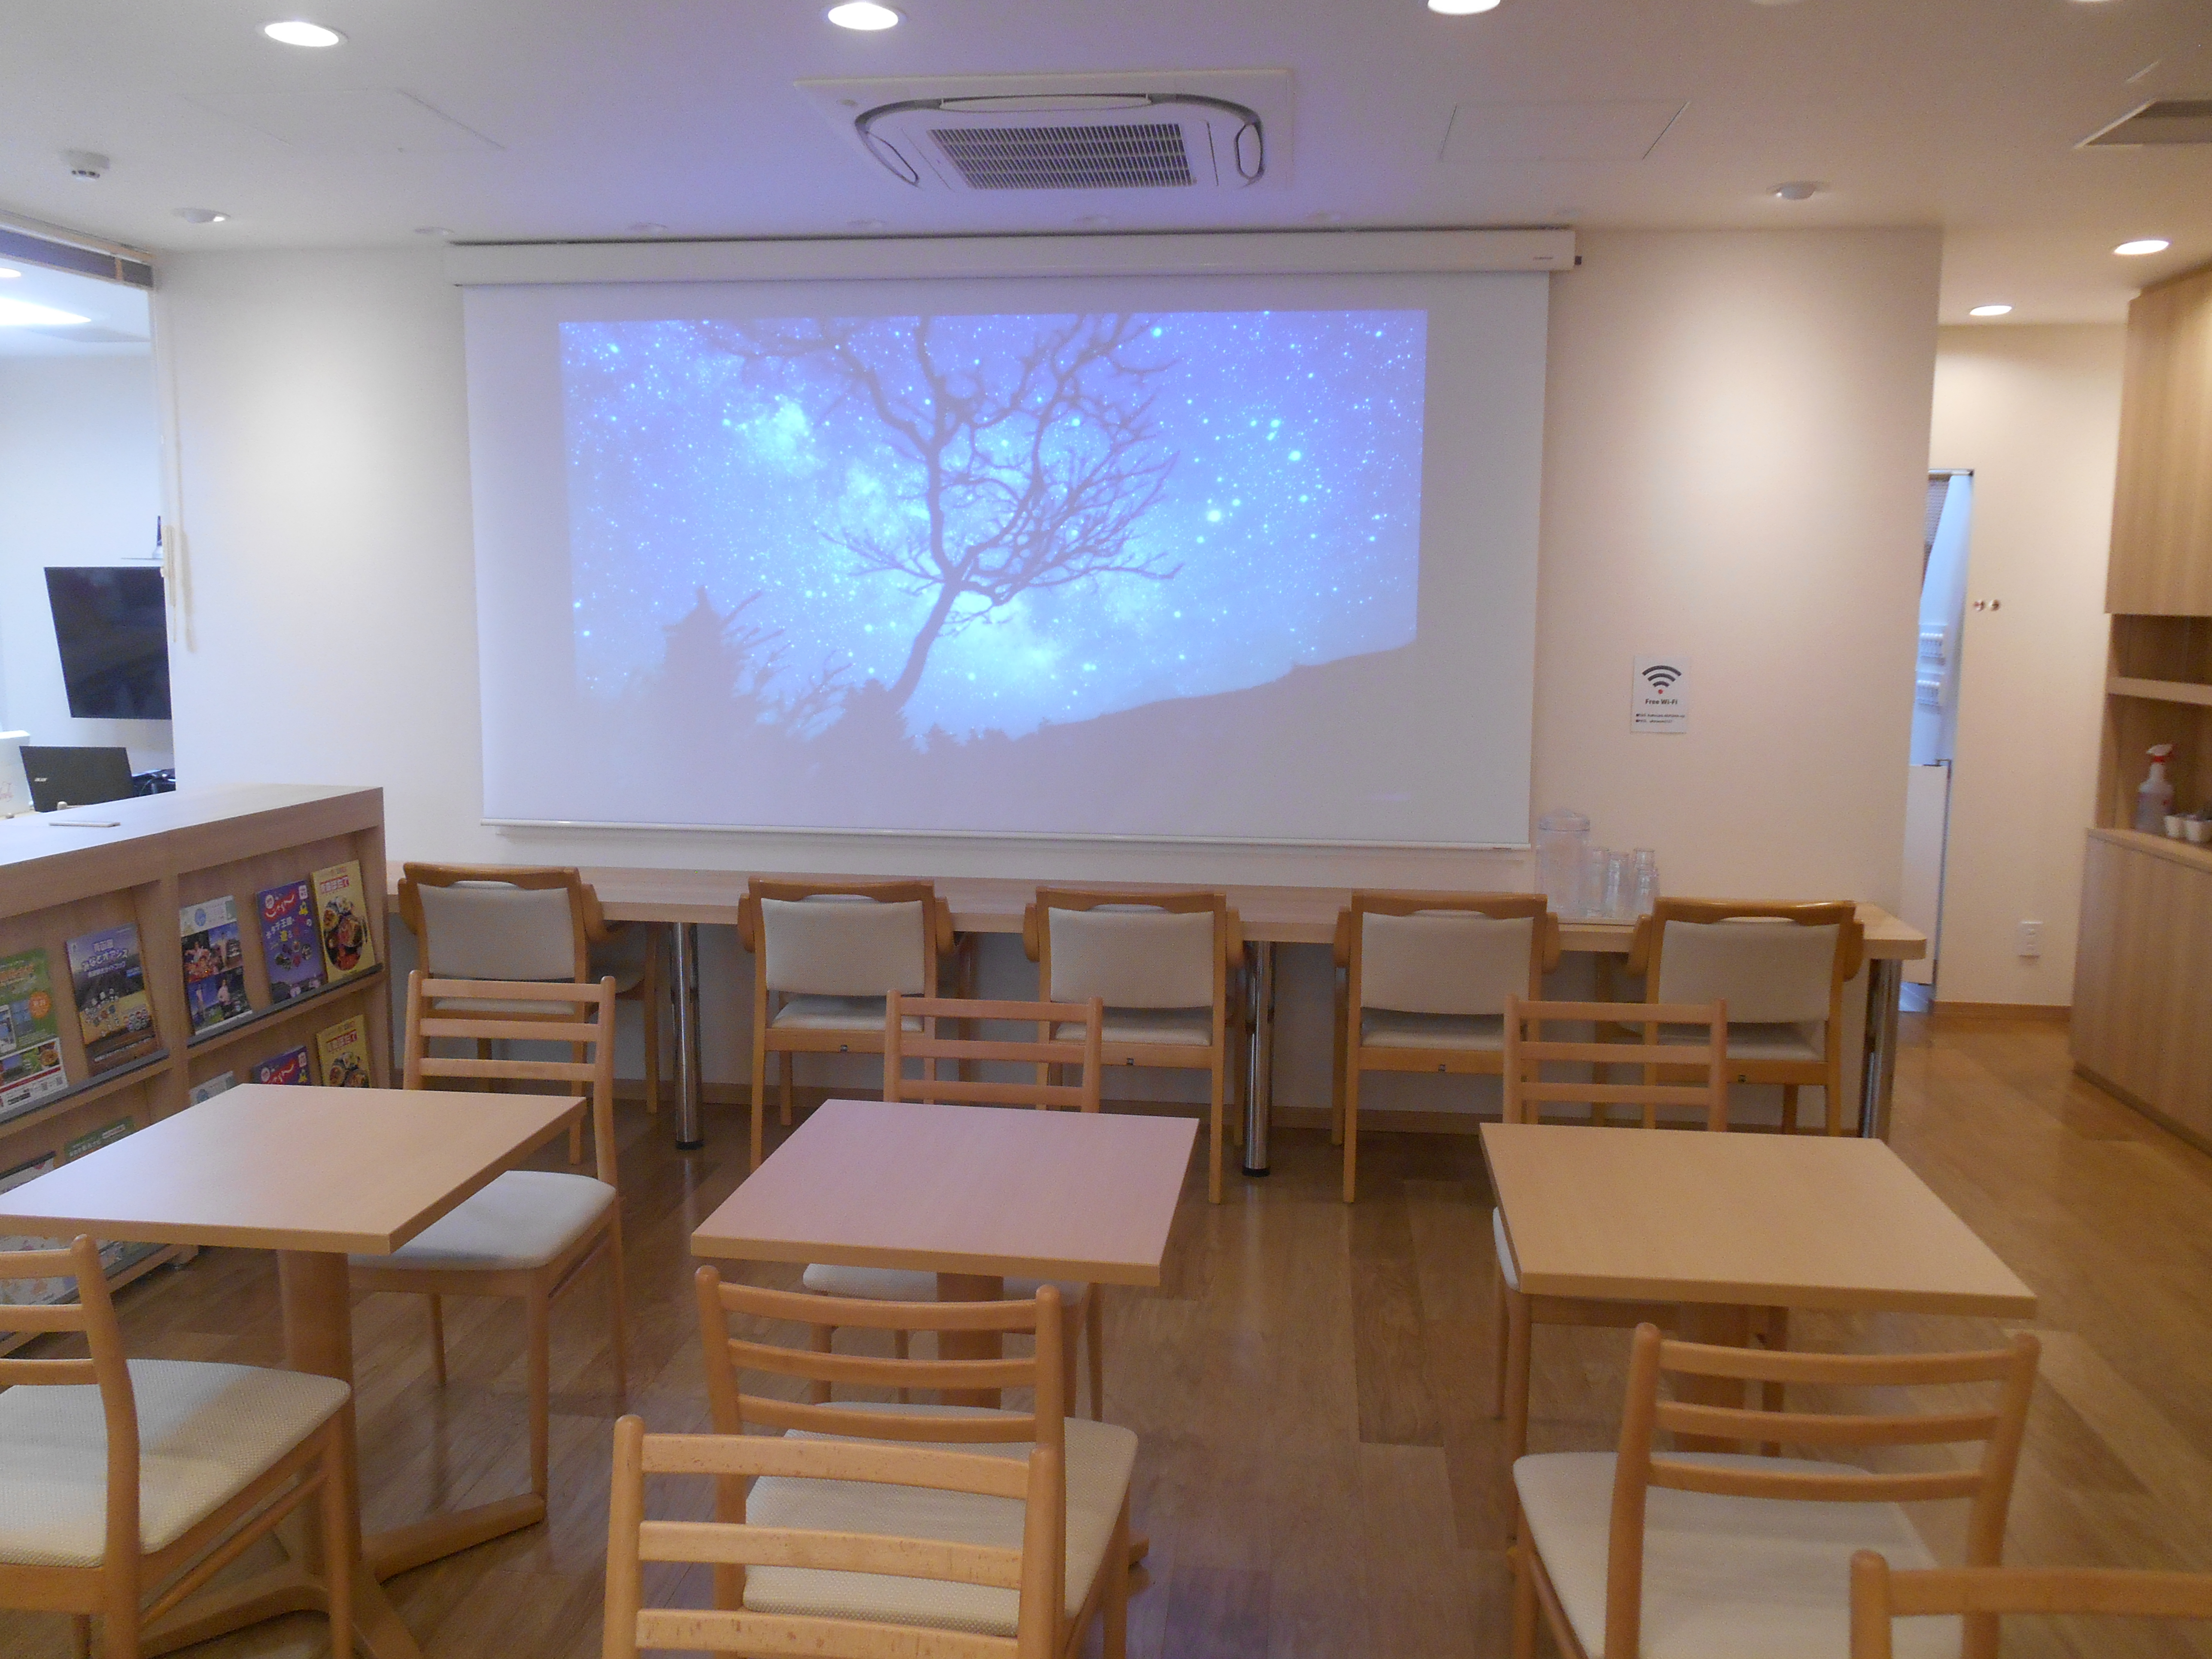 DSCN1356 - AoMoLink〜赤坂〜の第2回勉強会&交流会開催します。